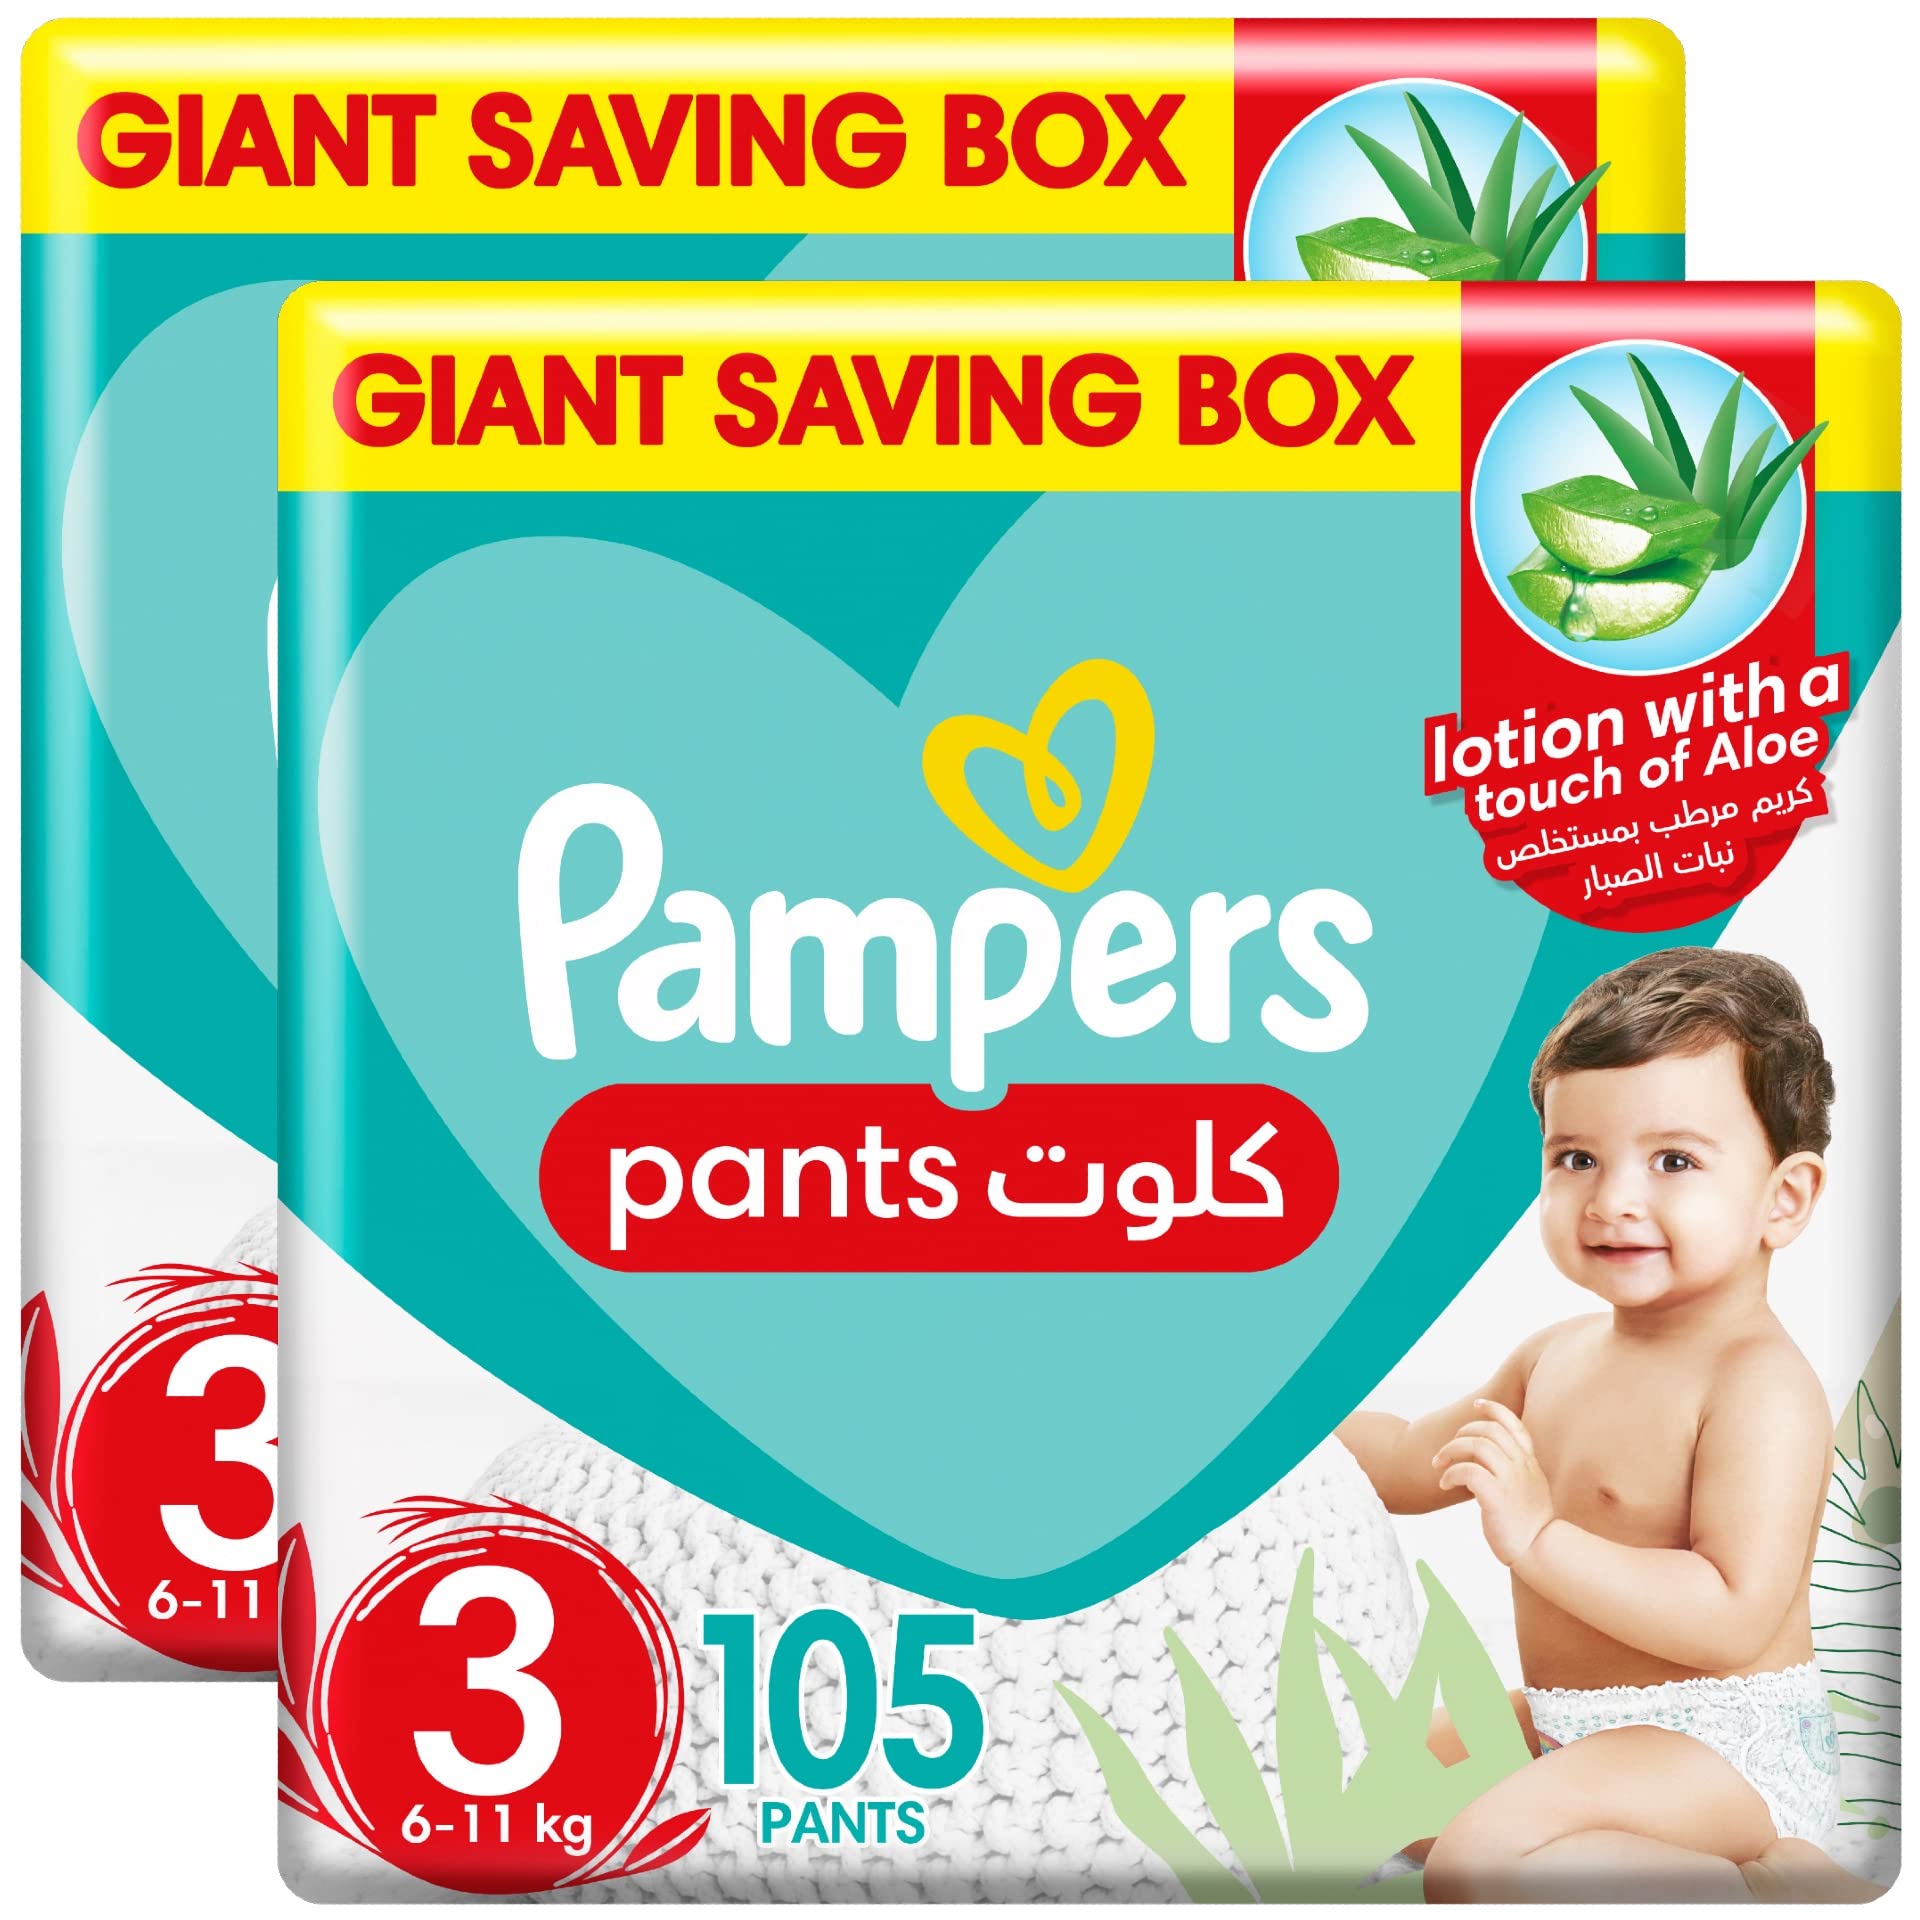 Pampers Baby-Dry Pants with Aloe Vera Lotion, Stretchy Sides, Leakage Protection Size 3, 6-11 kg, Mega Pack 210 Pants حفاضات بامبرز بتصميم سروال مقاس 3 بحجم متوسط للاطفال وزن من 6 الى 11 كغم، 210قطع